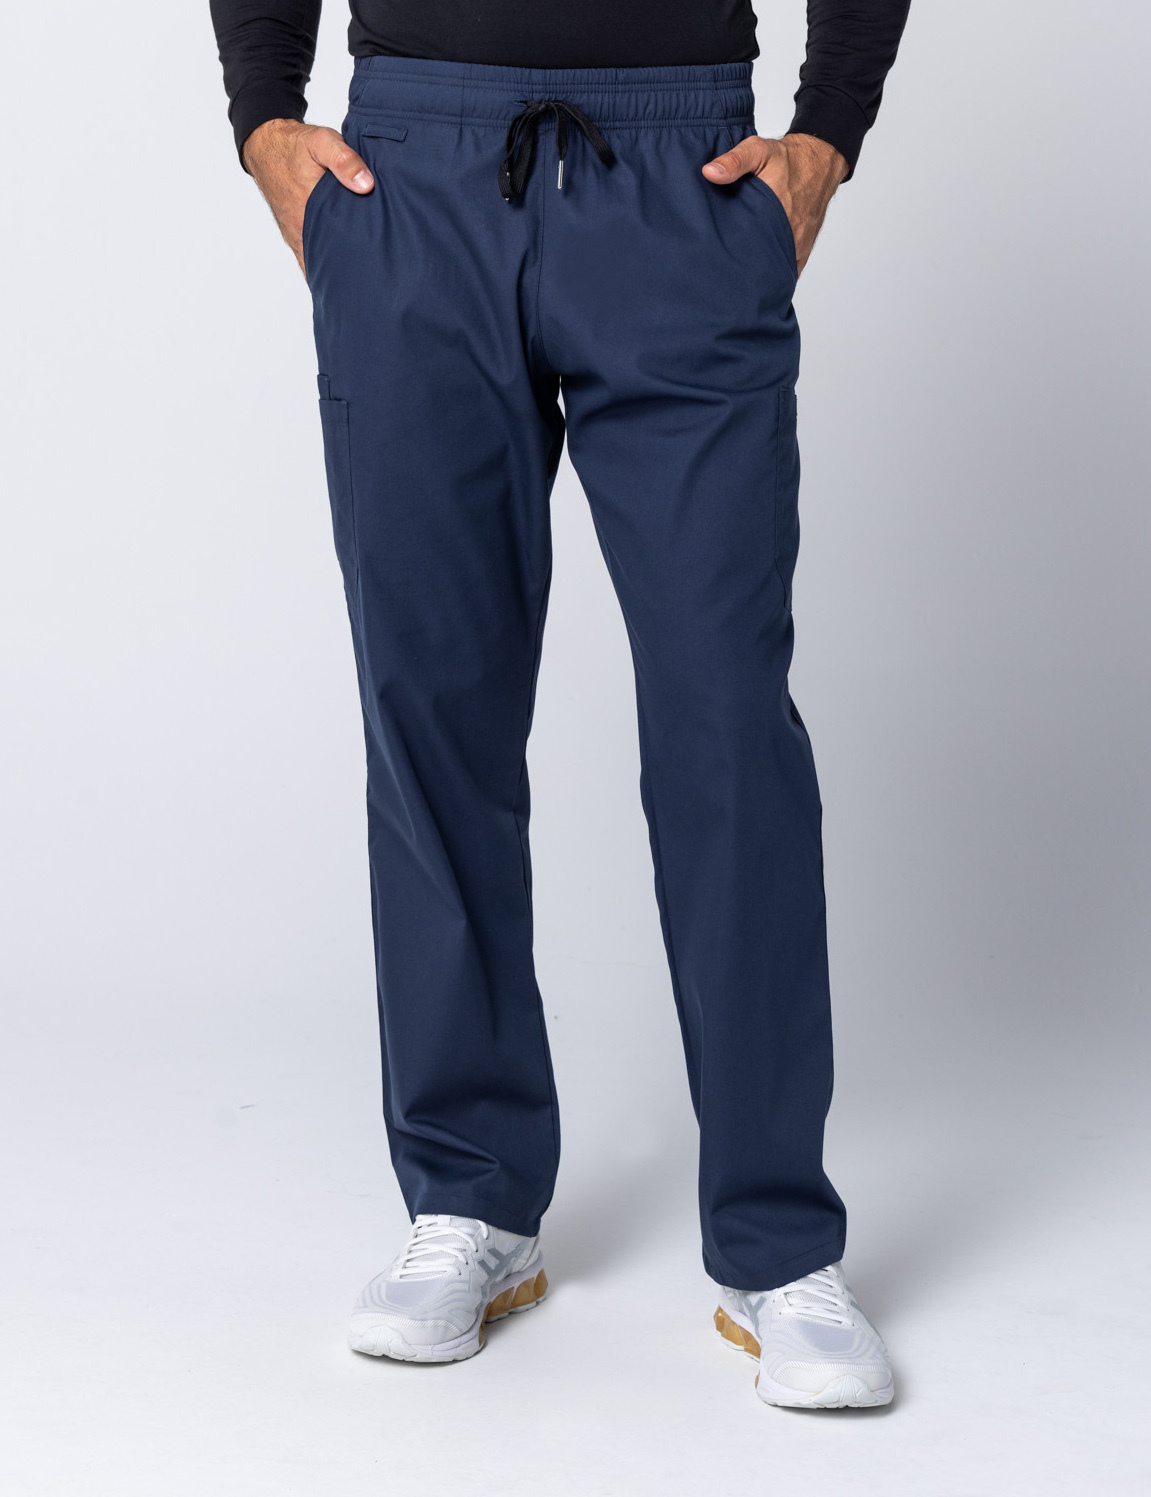 Men's Cargo Performance Pants - Navy - Large